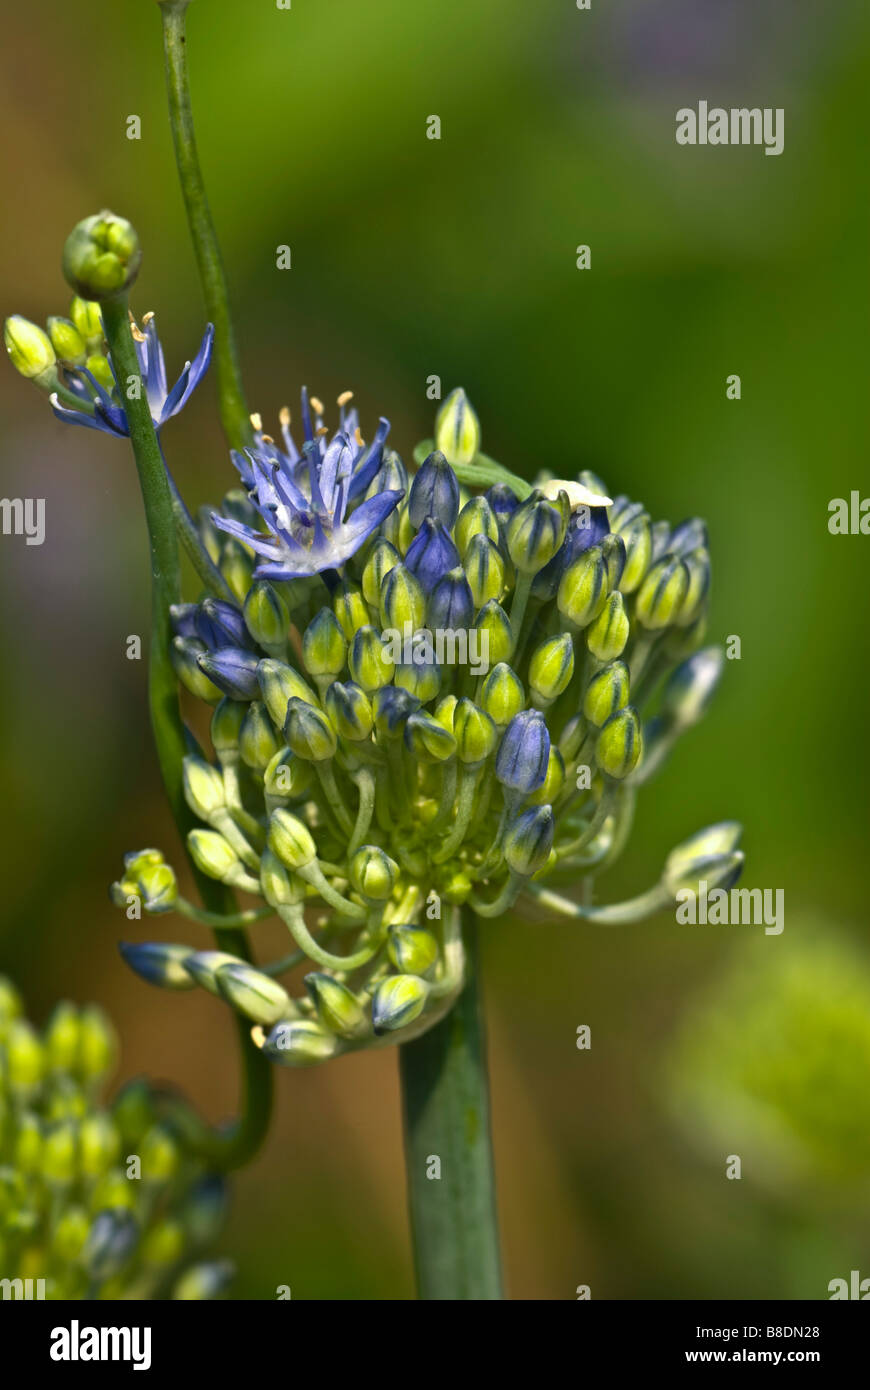 Close-up of flower head of blue globe onion, (Allium caeruleum synonymn Allium azureum) with flowers just beginning to open. Stock Photo